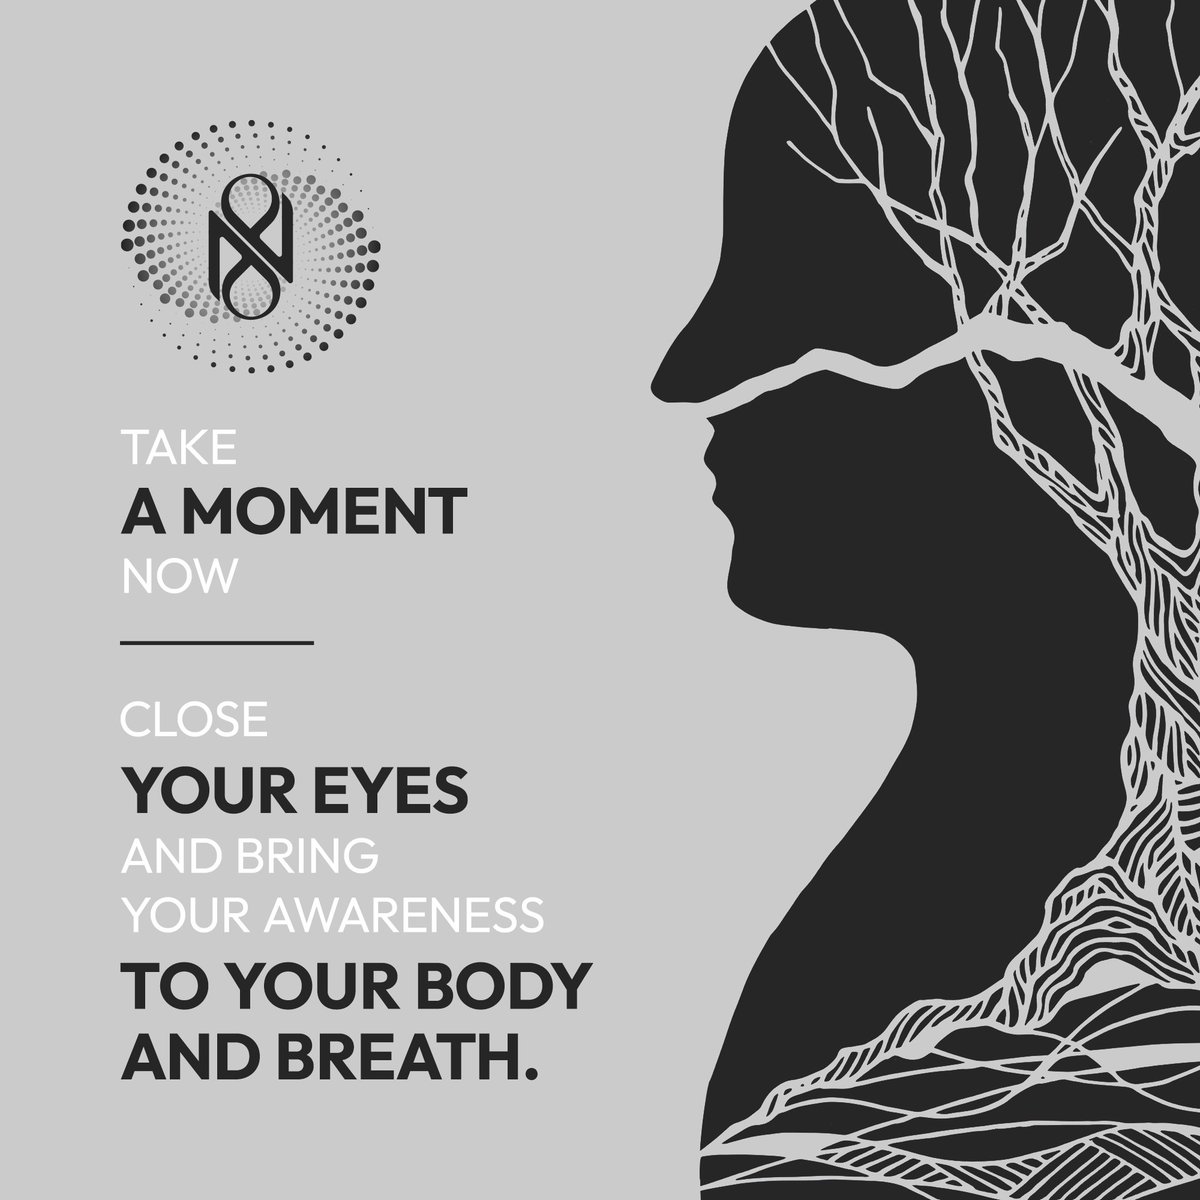 #quote #wordsofwisdom #mindfulnessmoment #bodyawareness #breathwork #selfcare #innerpeace